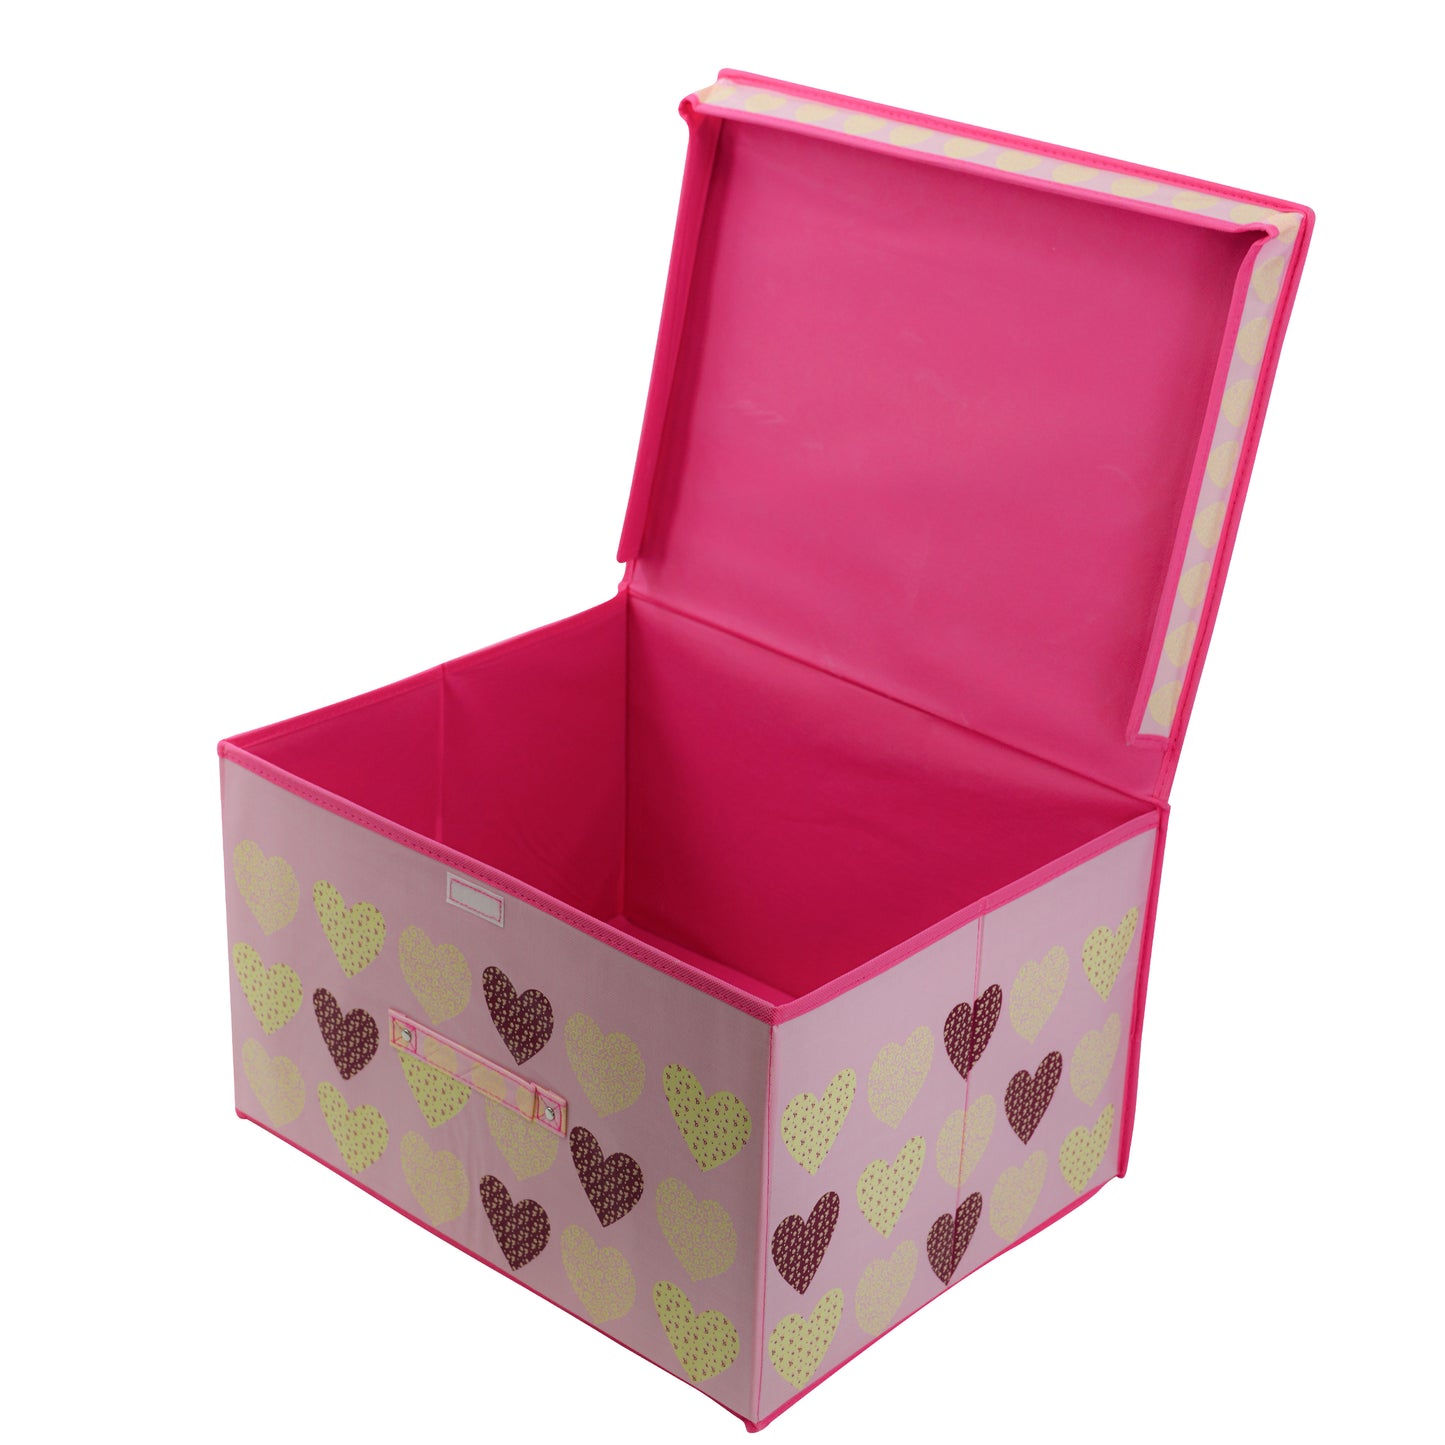 Pink Hearts Large Storage Box by The Magic Toy Shop - UKBuyZone